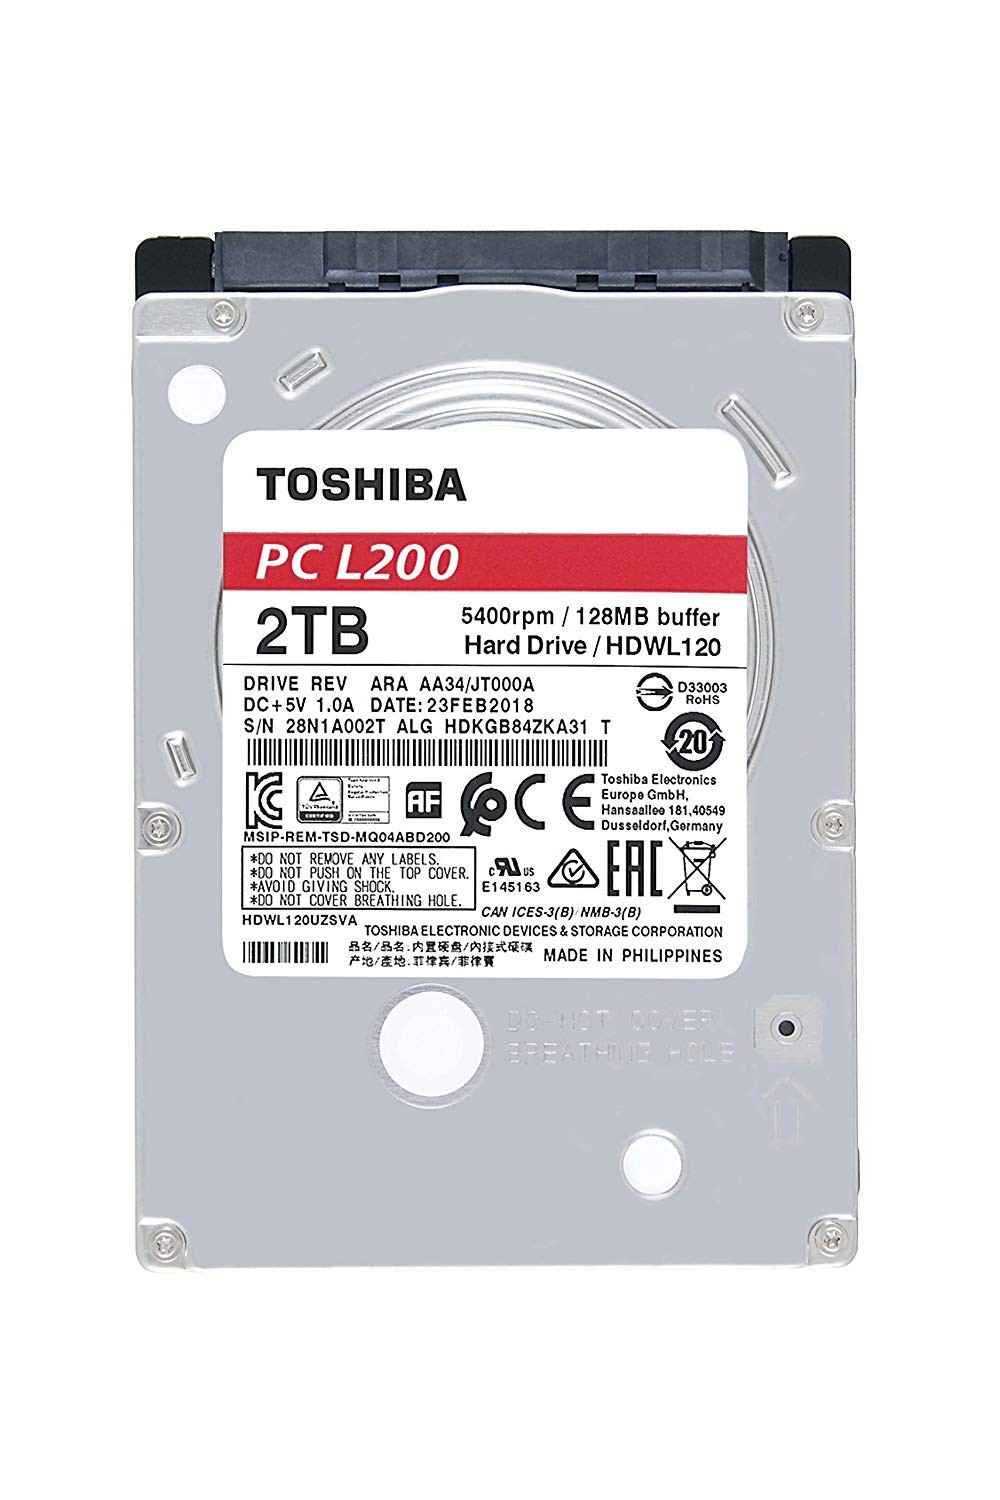 TOSHIBA 2TB INTERNAL LAPTOP HDD 2.5 INCH